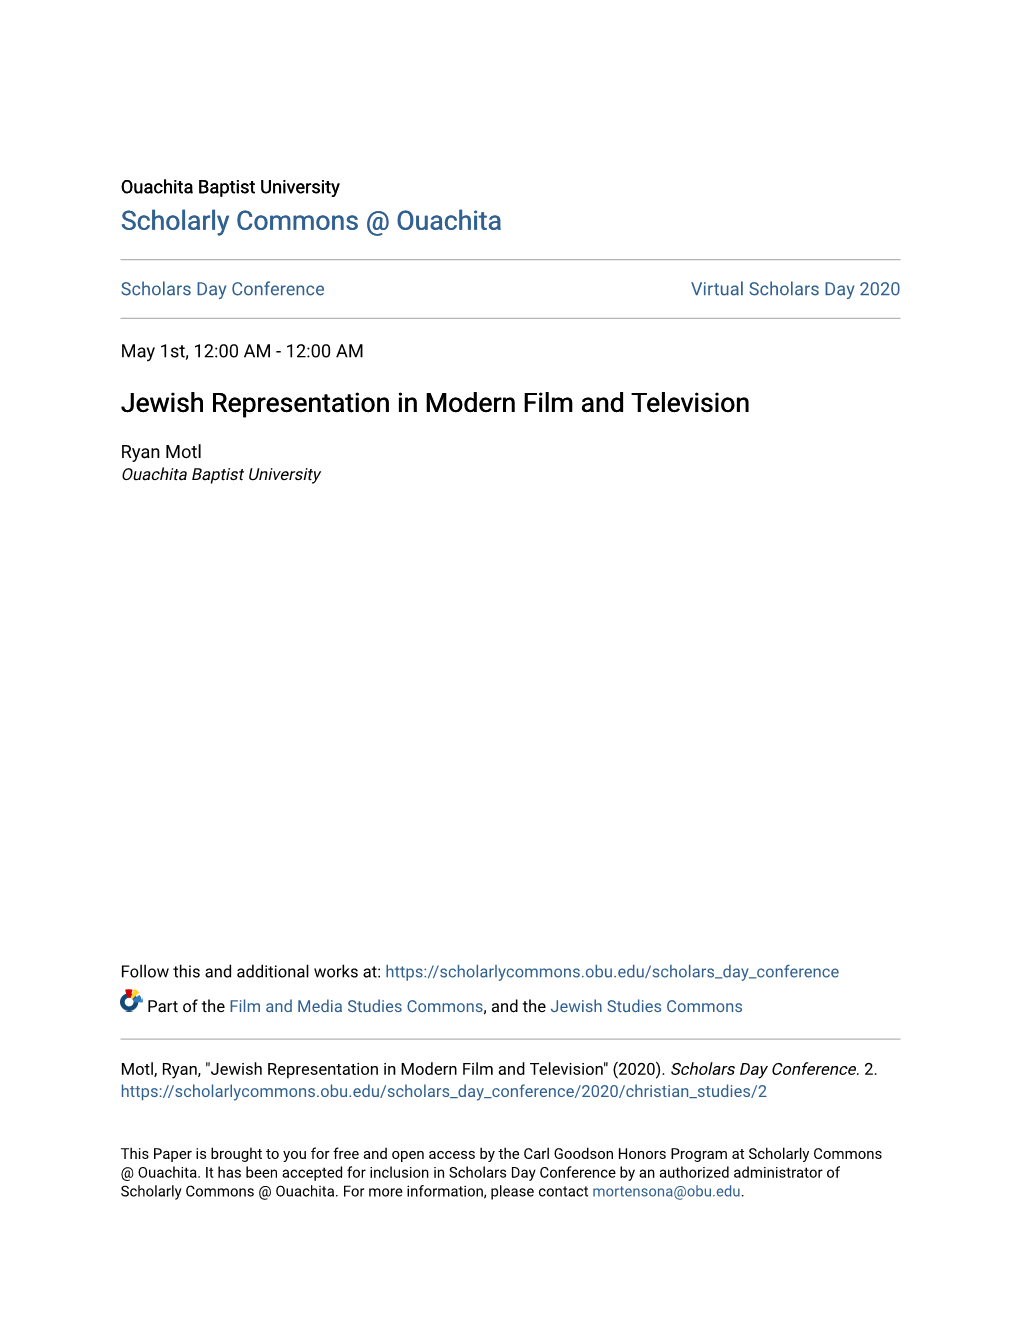 Jewish Representation in Modern Film and Television